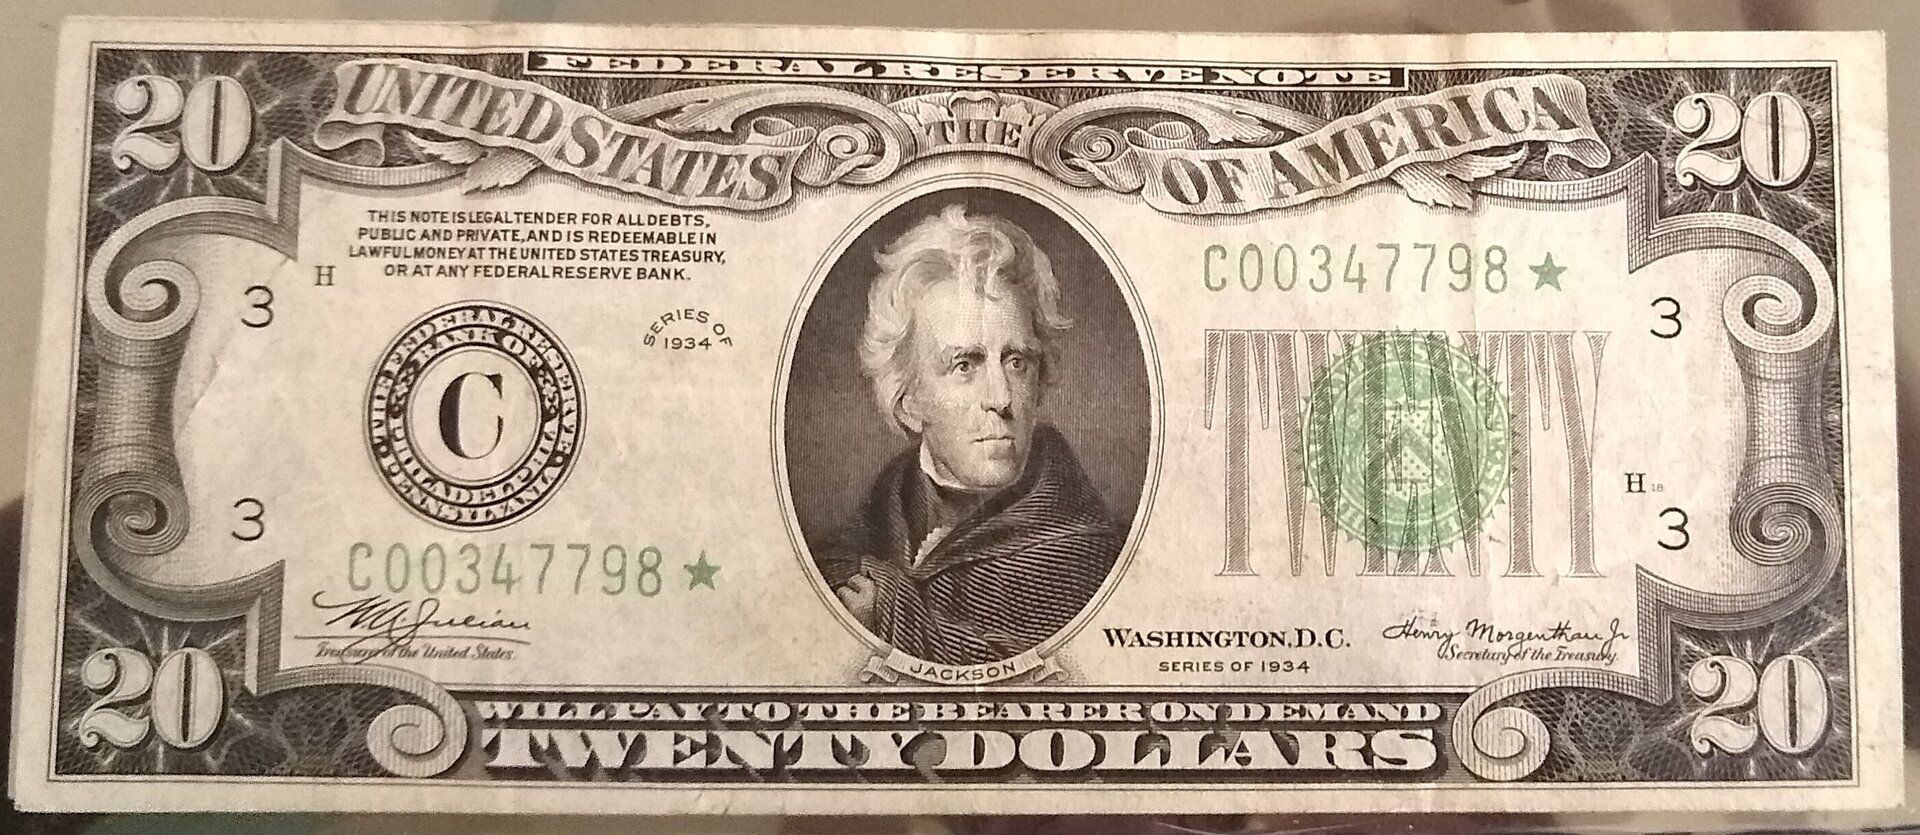 twentydollar star note front.jpg